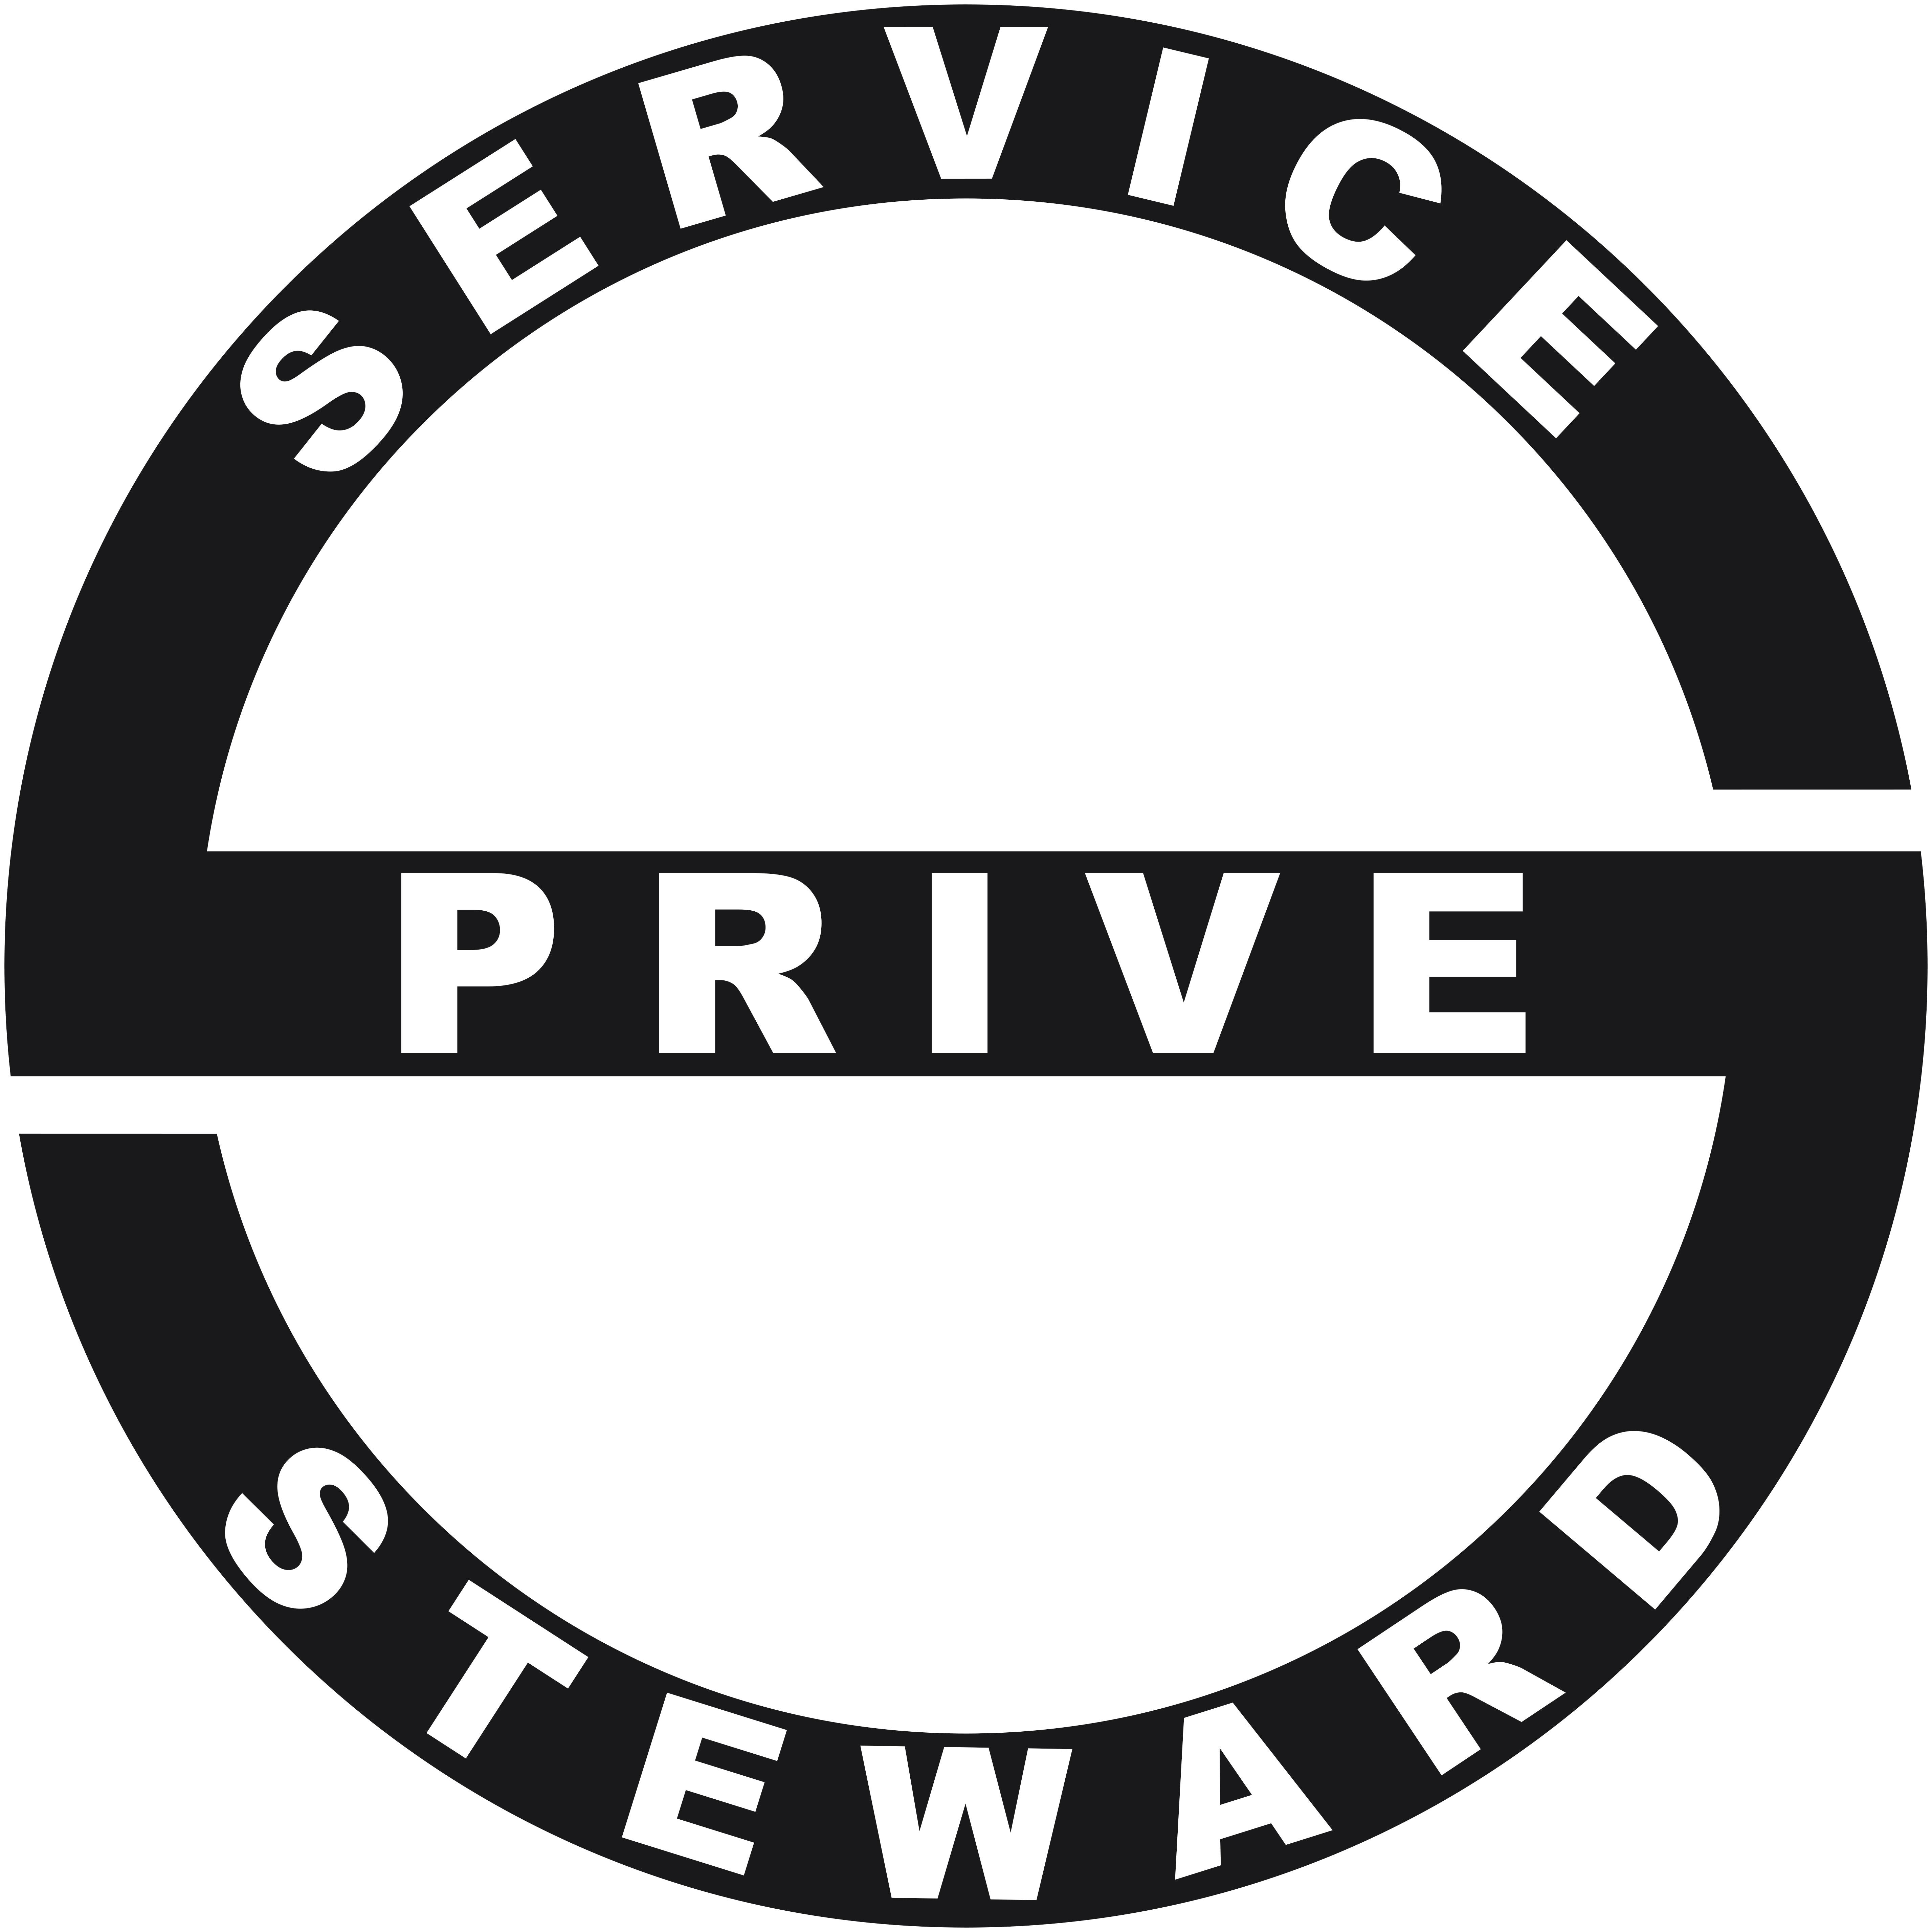 service prive steward